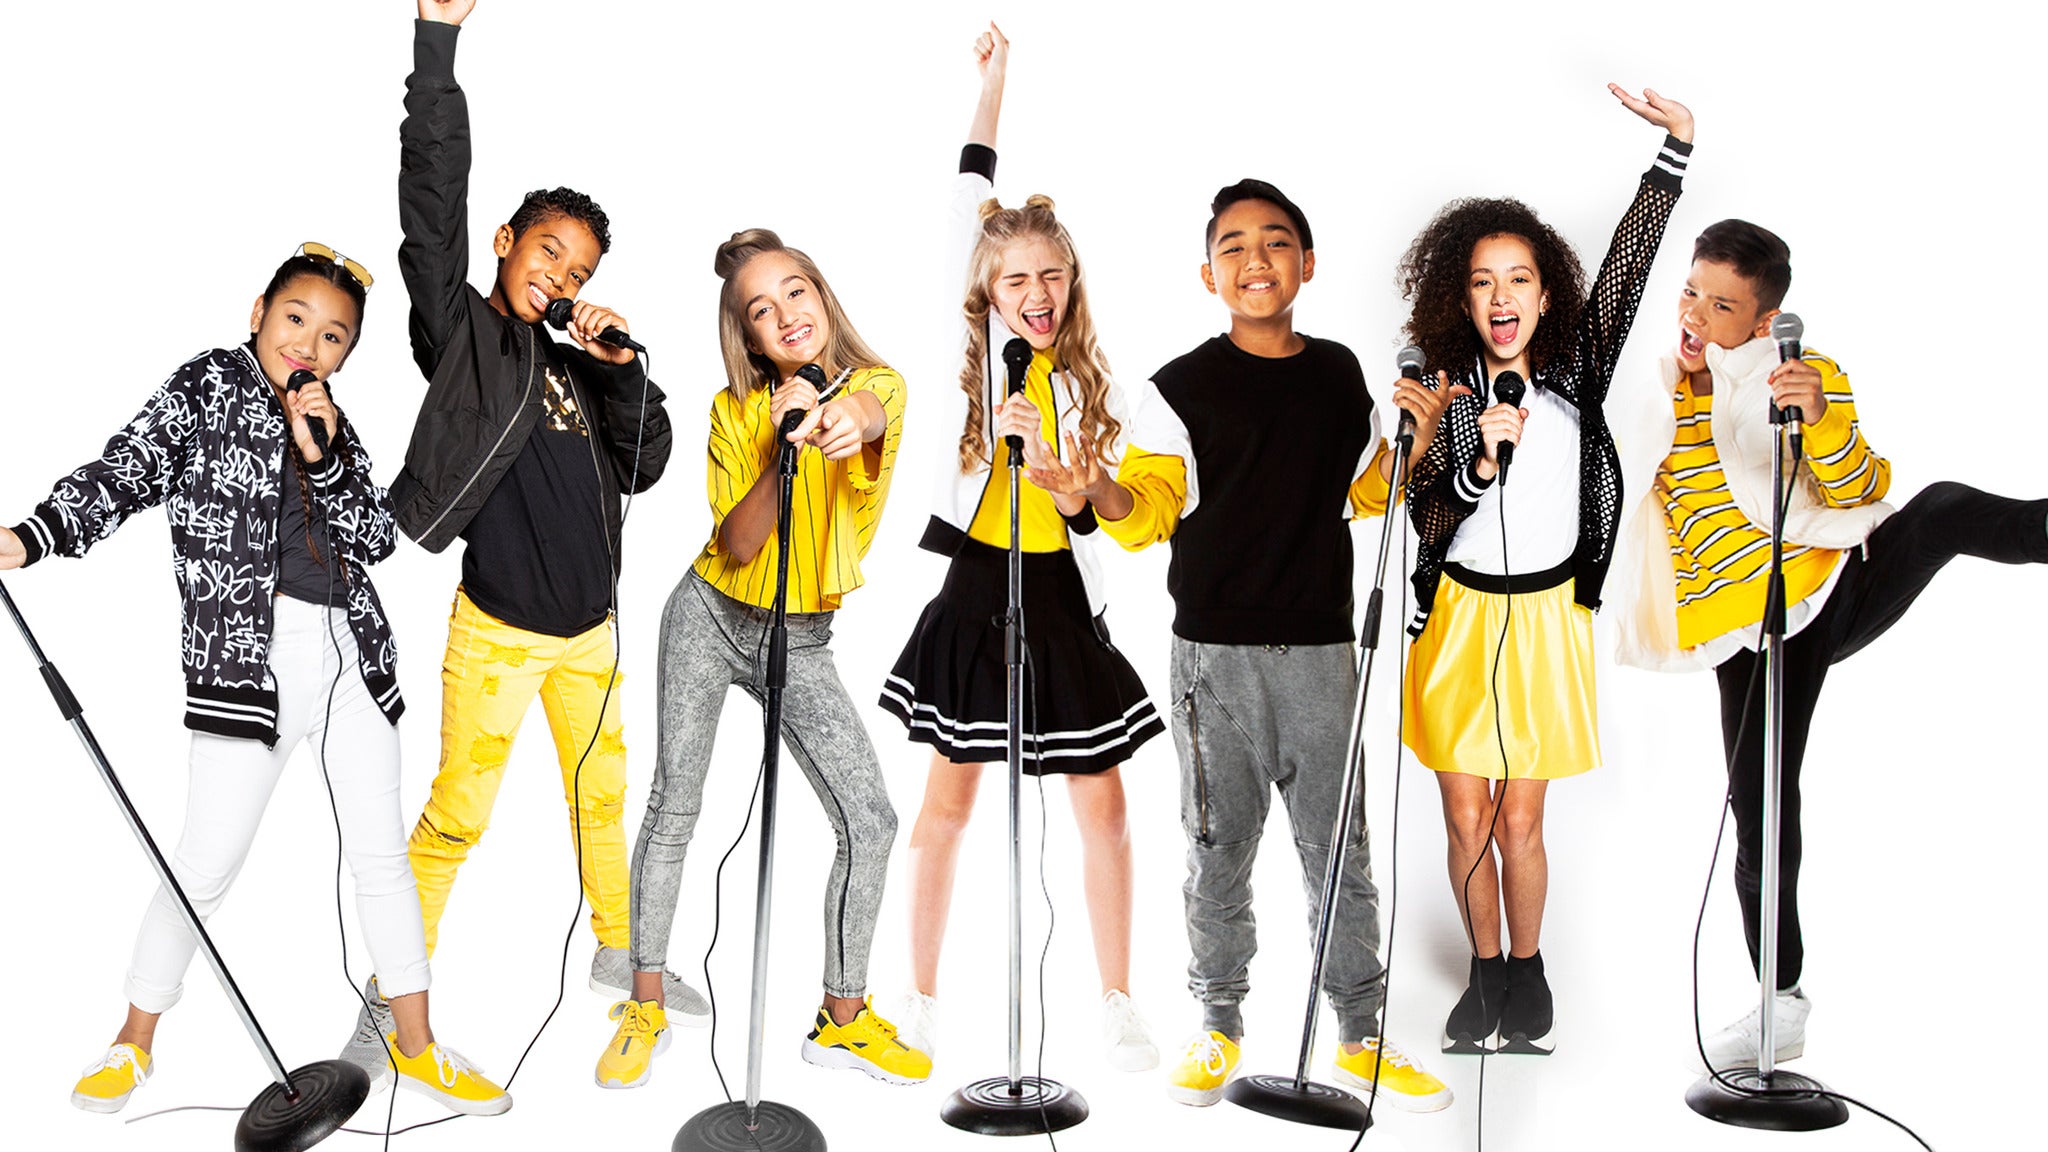 Mini Pop Kids Live: Take Flight Concert Tour in Calgary promo photo for 2 For 1 presale offer code